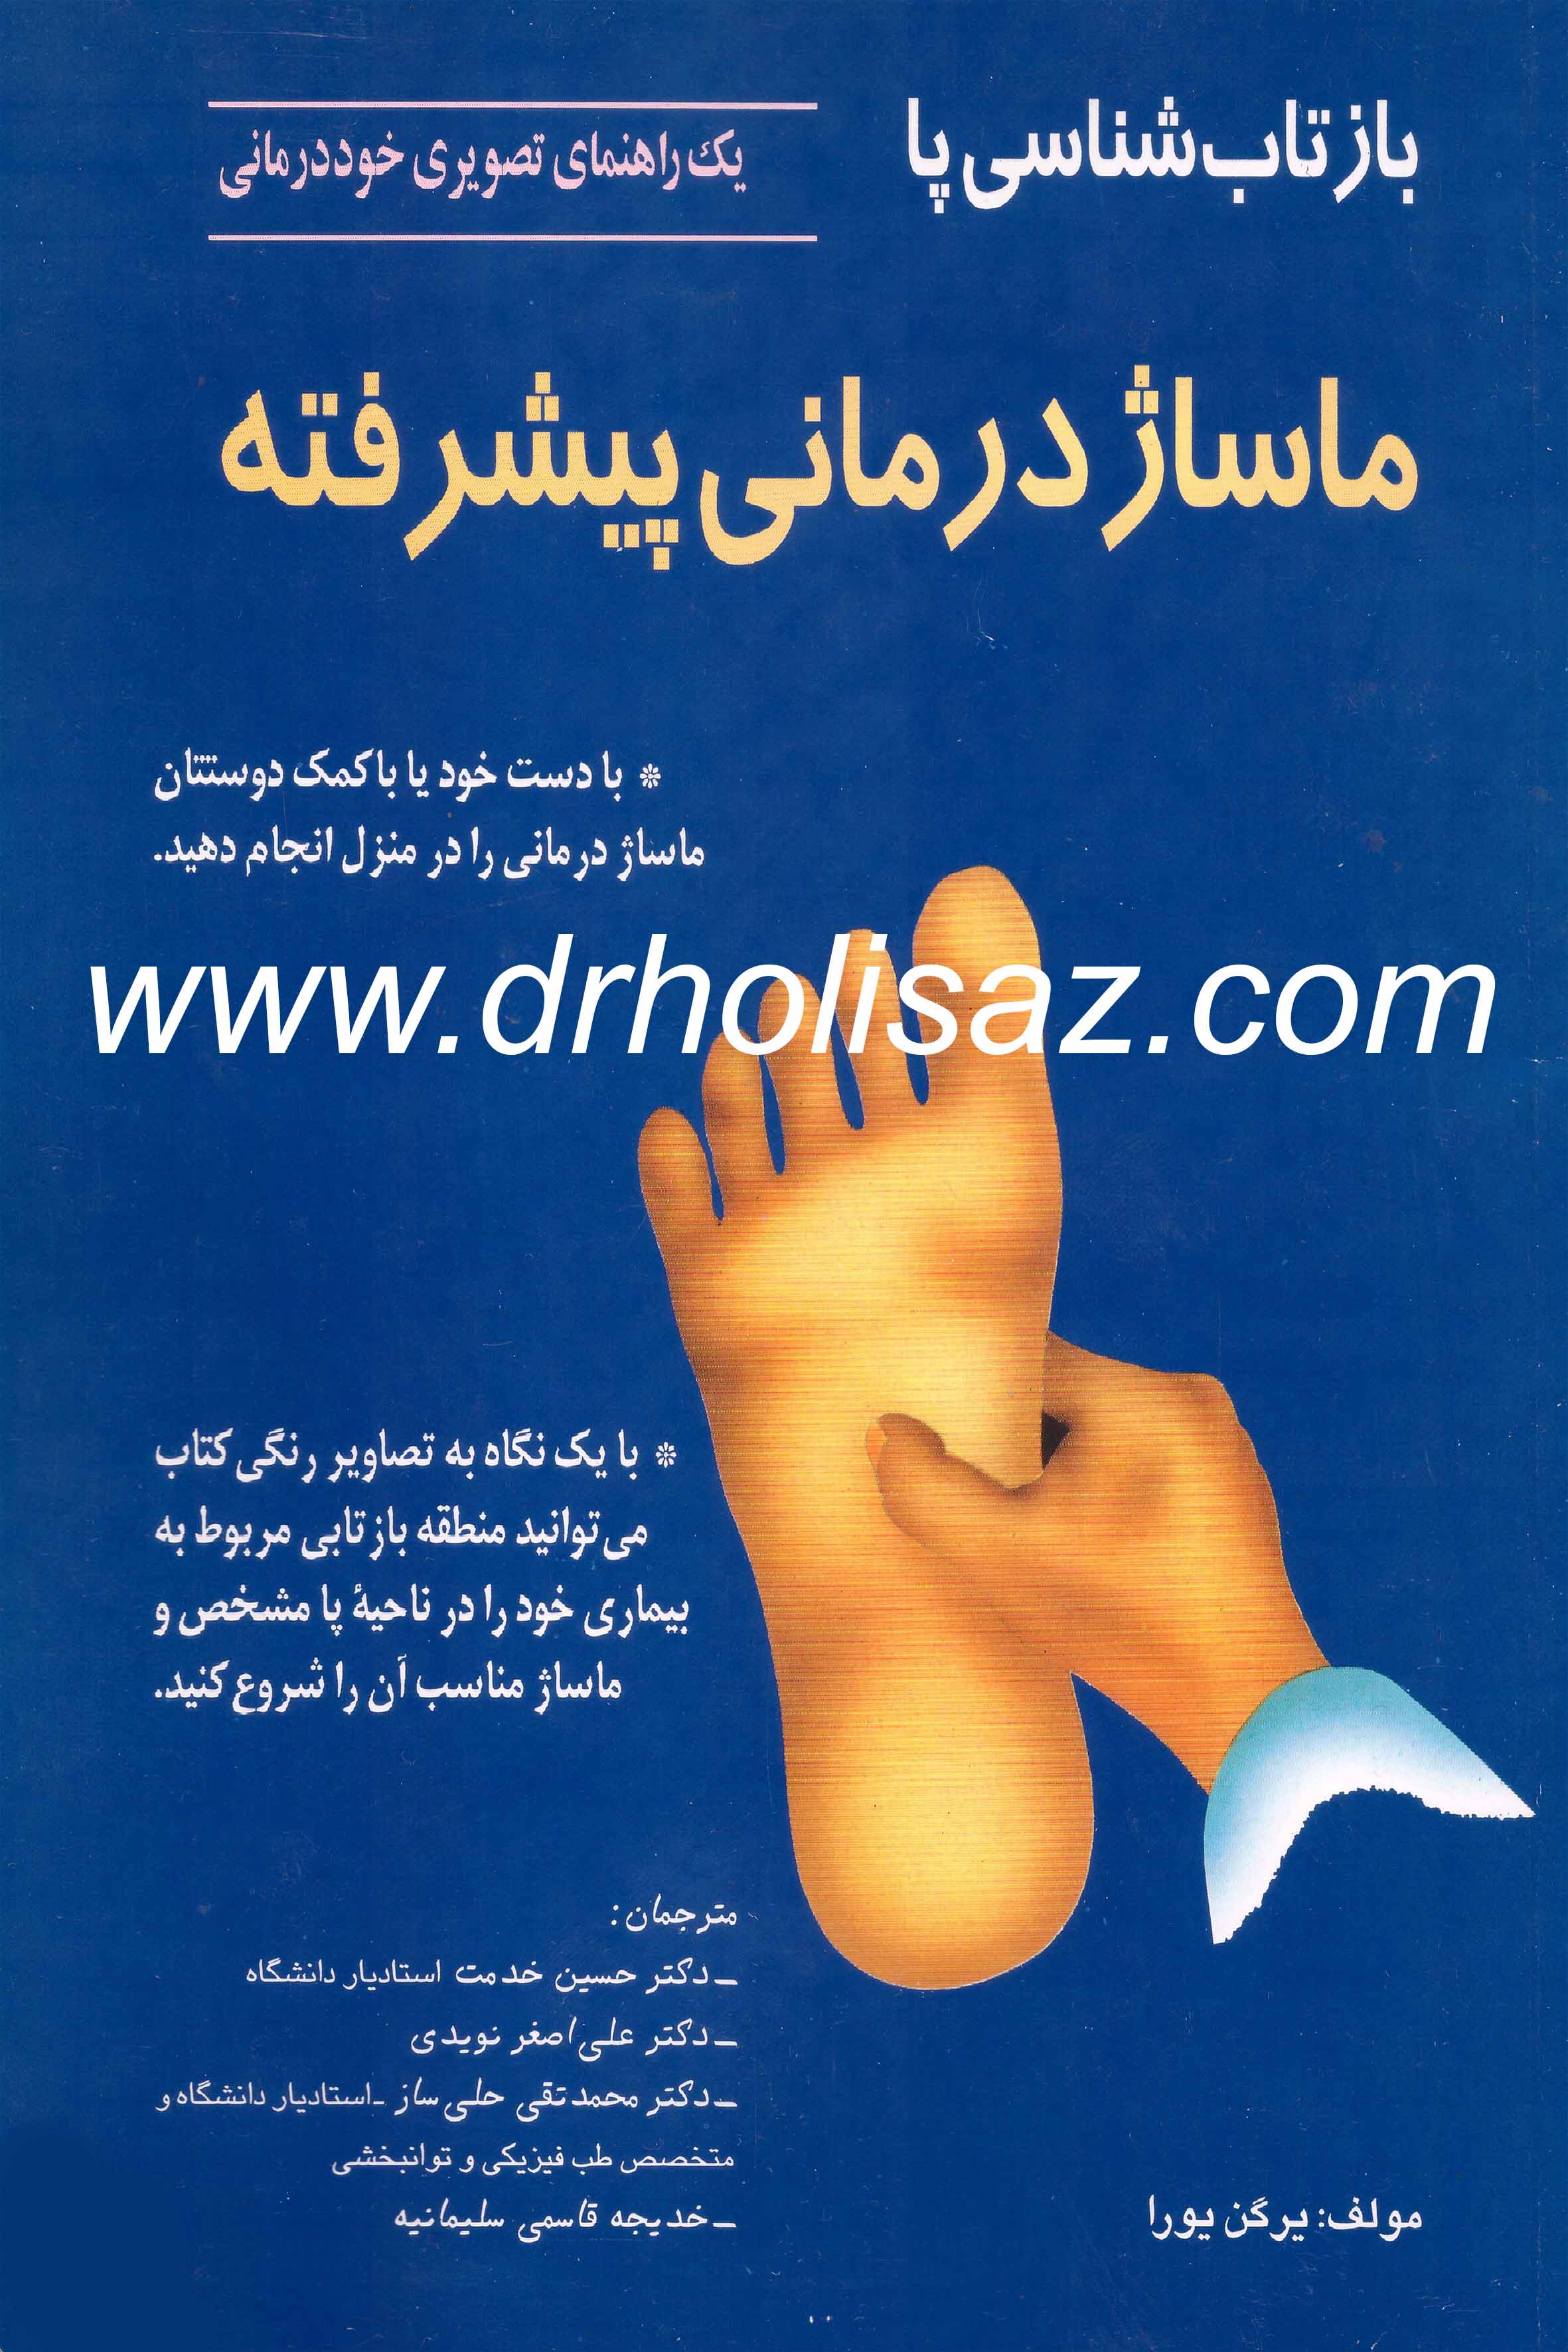 www.drholisaz.com-massagepa